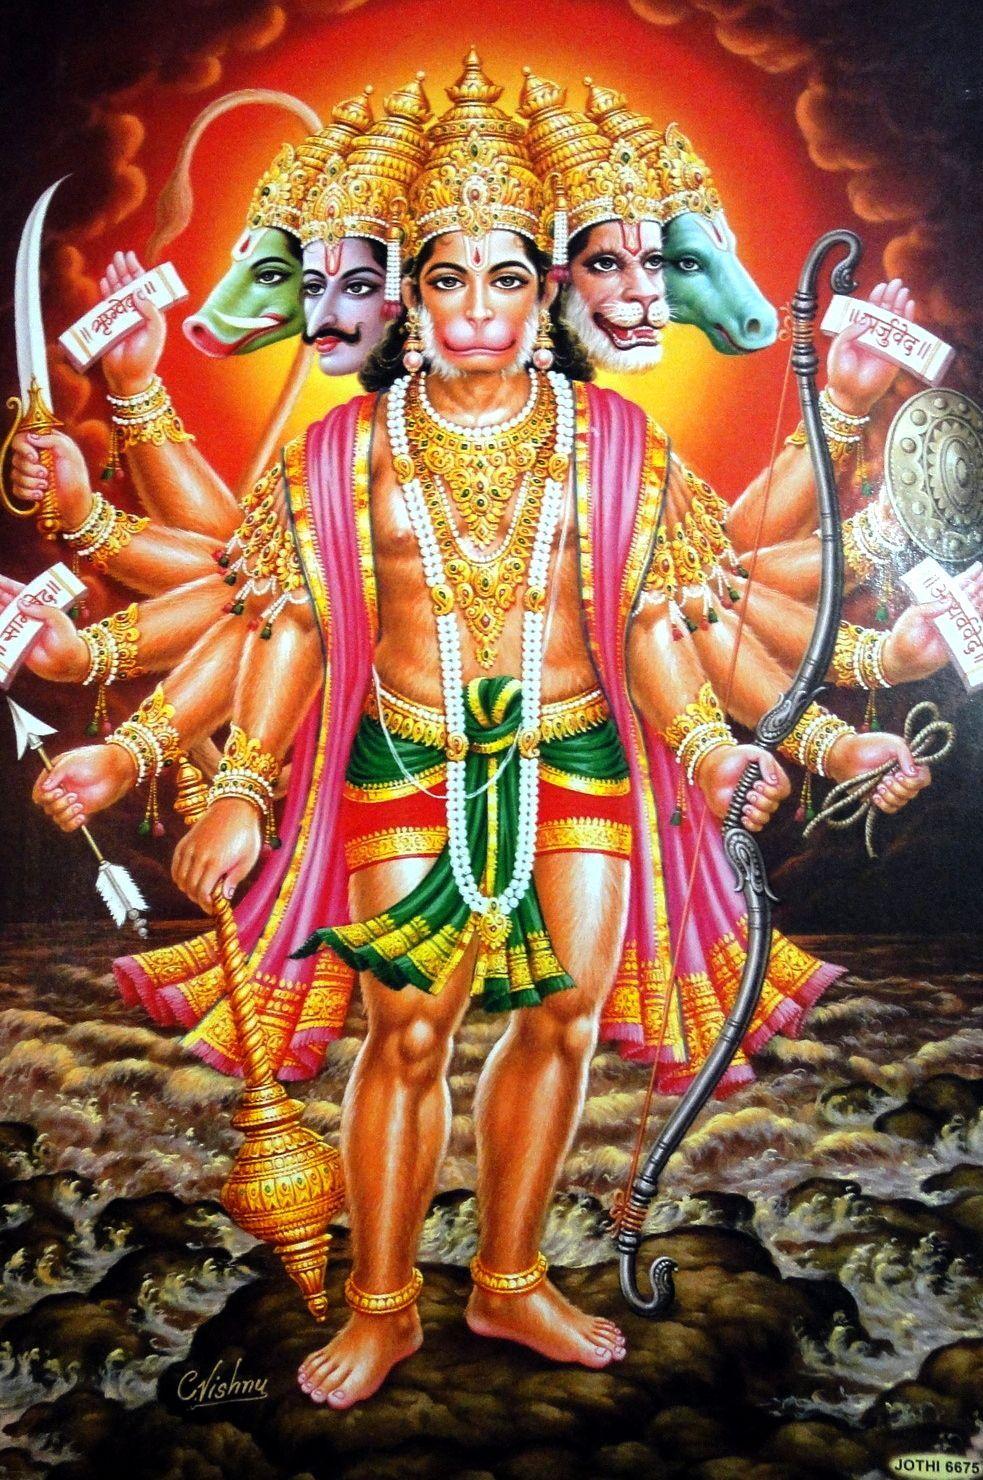 Download Hanuman Image Freeहनमन इमज फर डउनलड